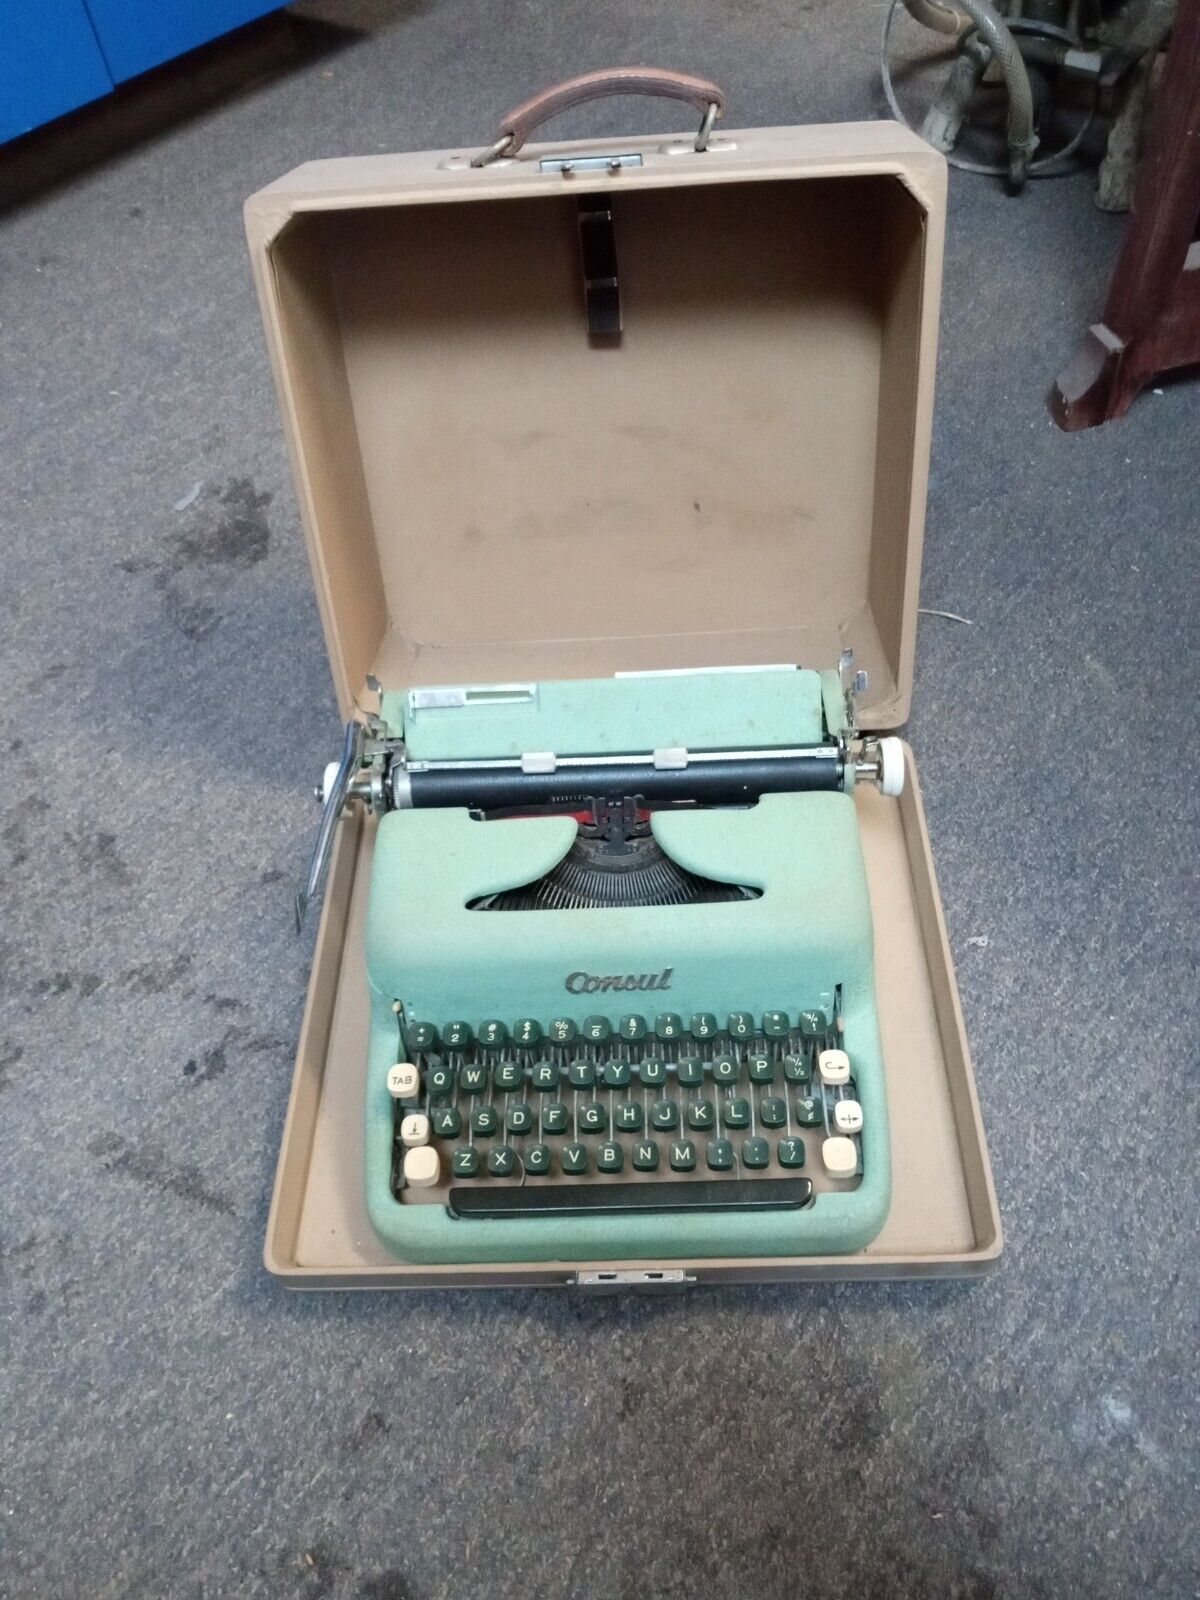 1959 Consul Typewriter made Czech republic 